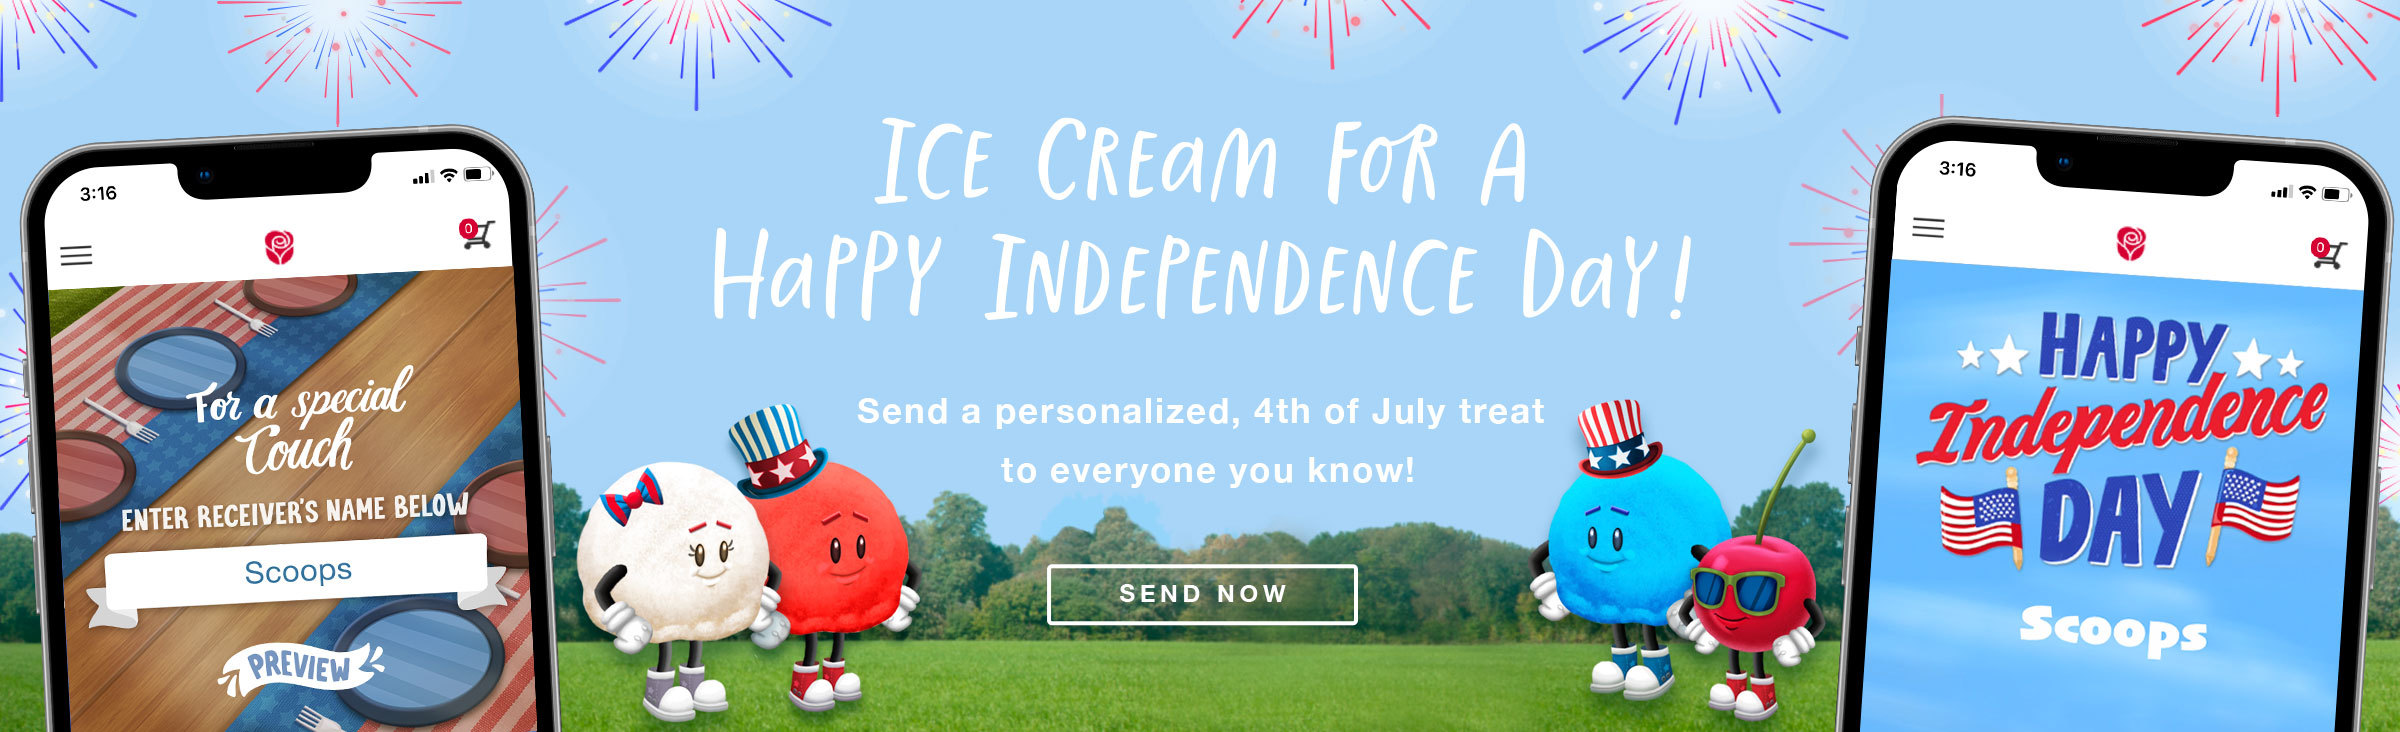 Super Scoop ice cream 4th of July card